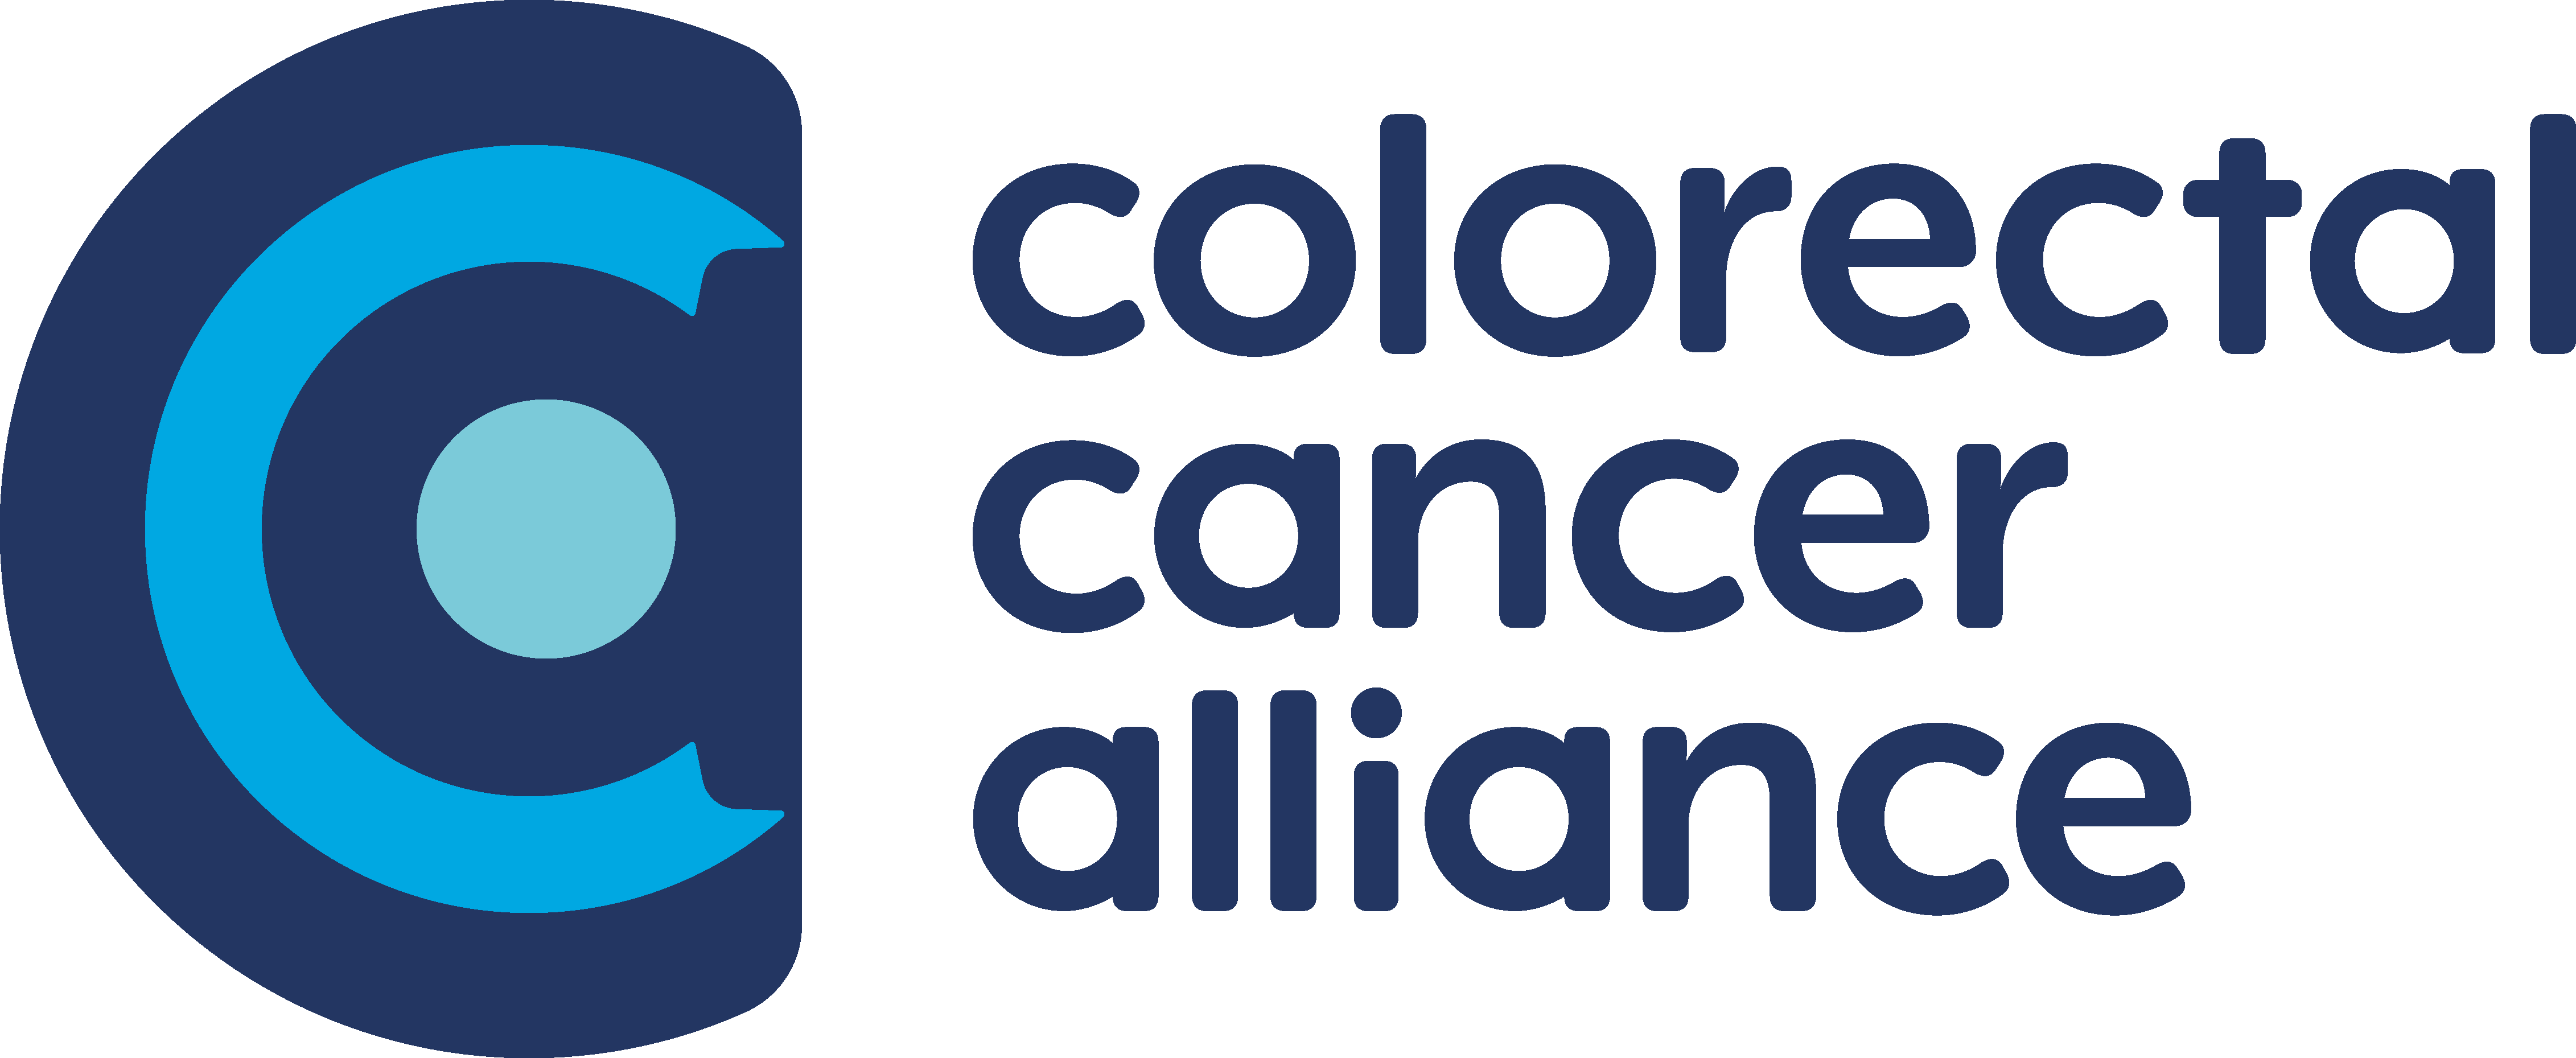 Colorectal Cancer Al